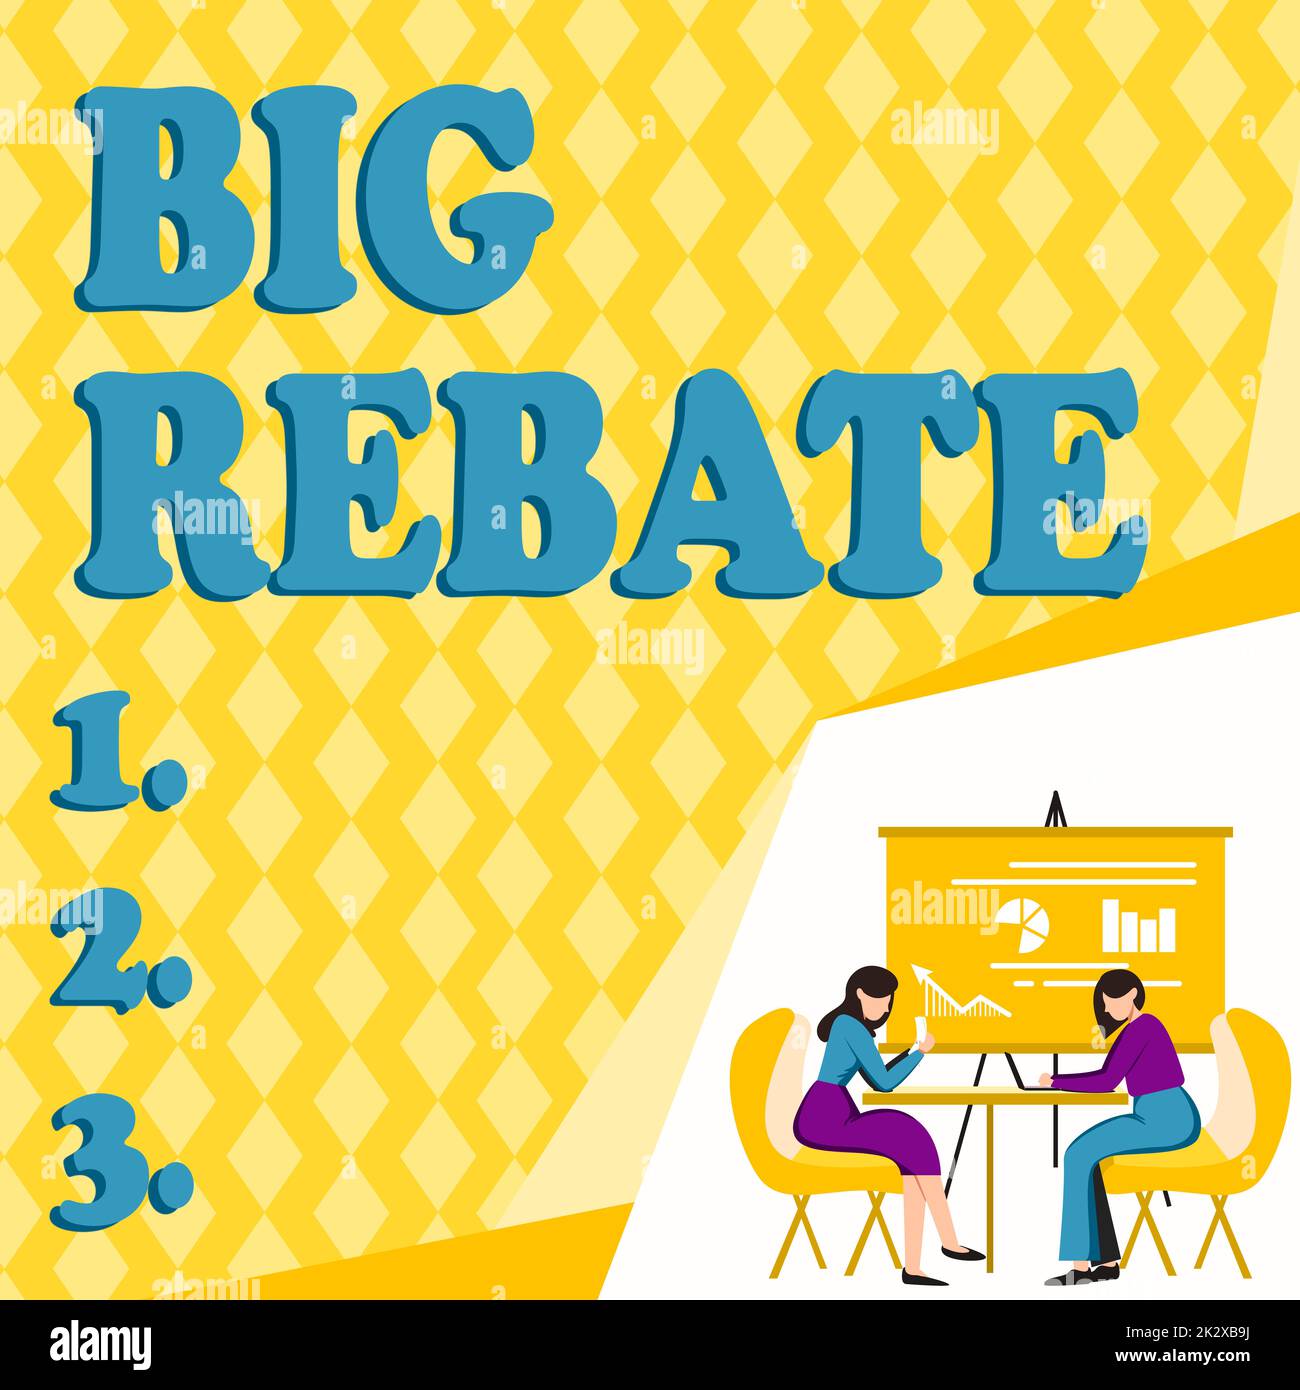 text-caption-presenting-big-rebate-concept-meaning-huge-rewards-that